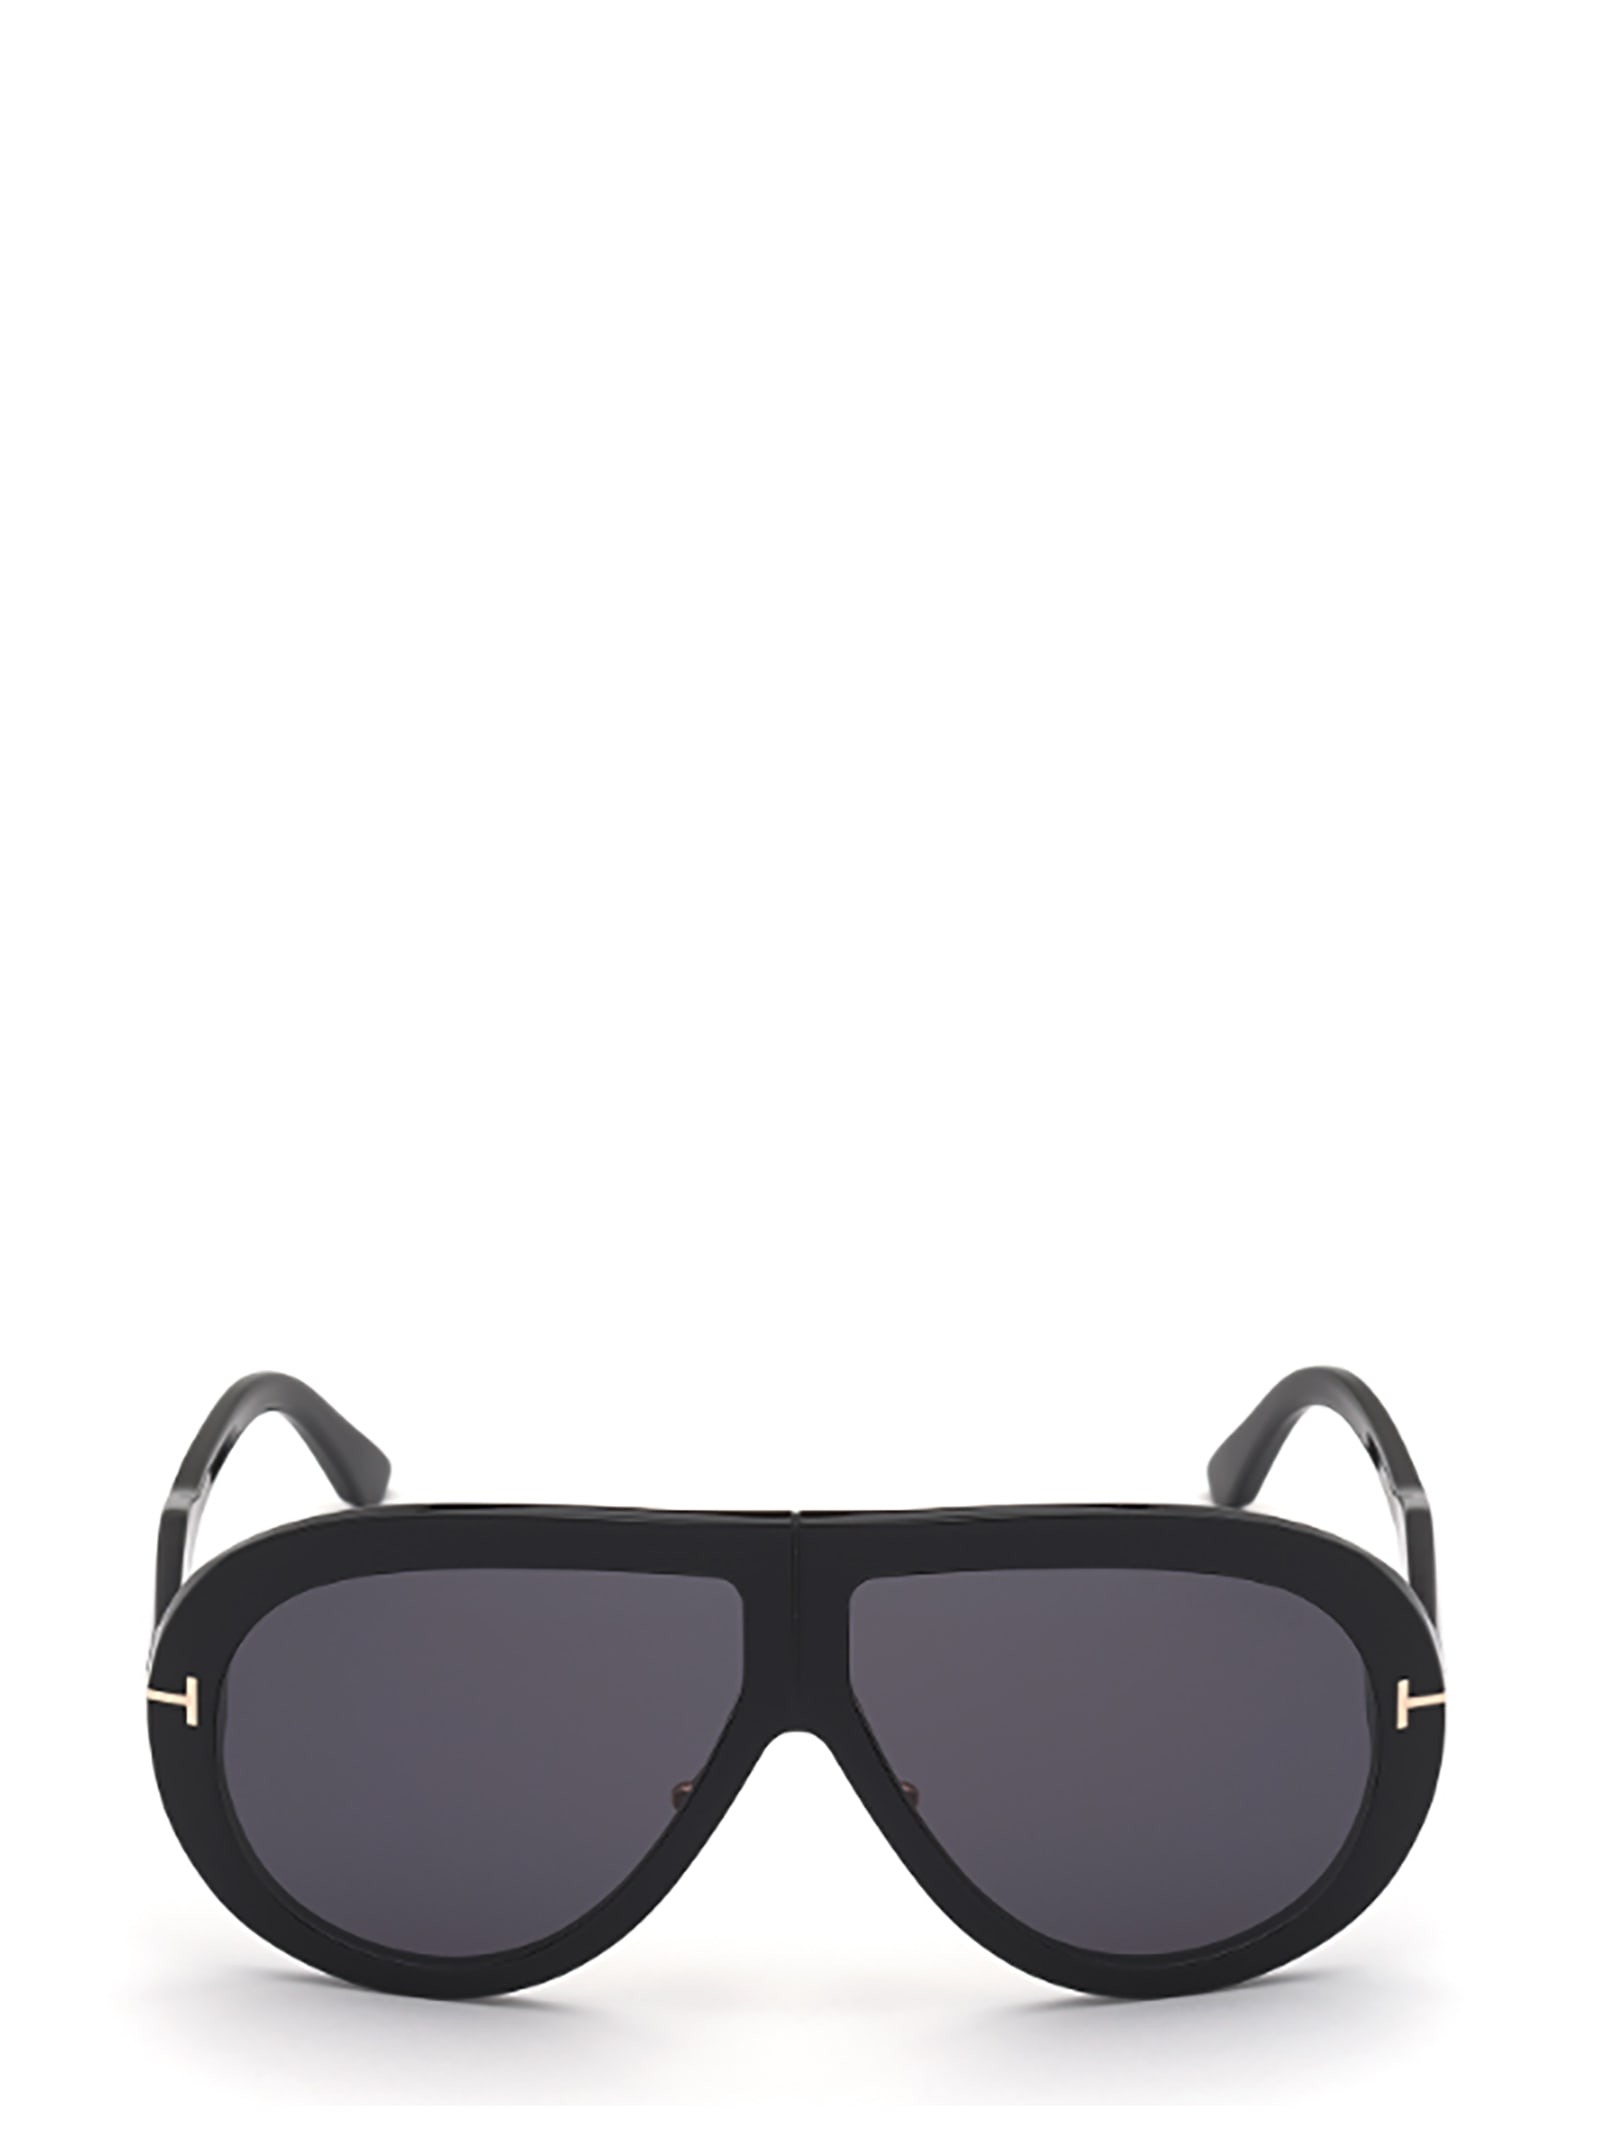 Tom Ford Ft0836 Shiny Black Sunglasses